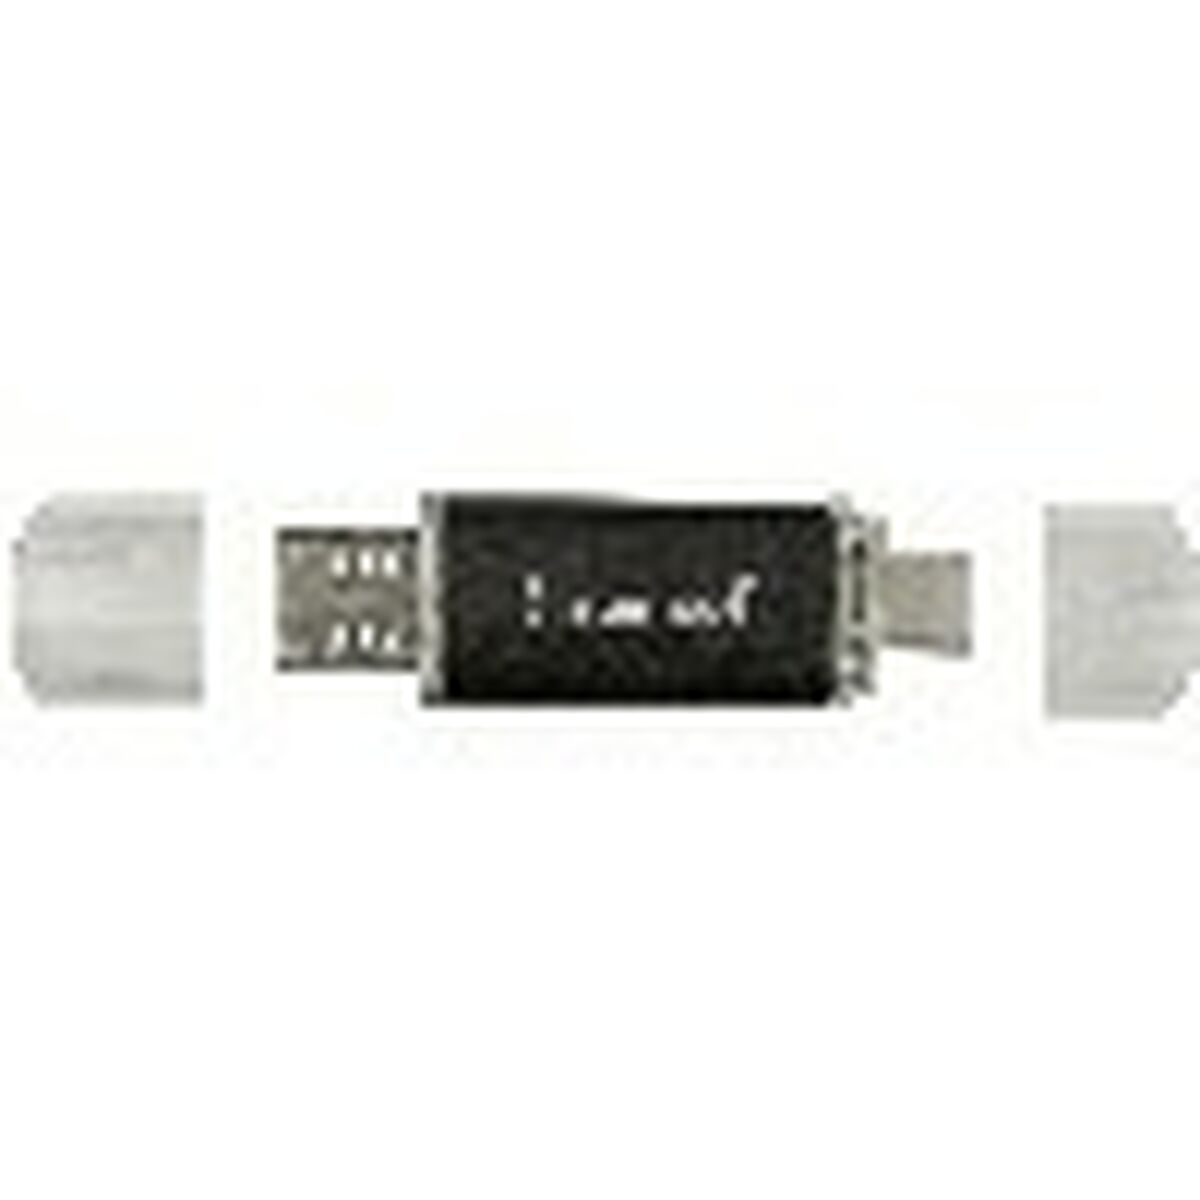 USB stick INTENSO Anthracite 64 GB